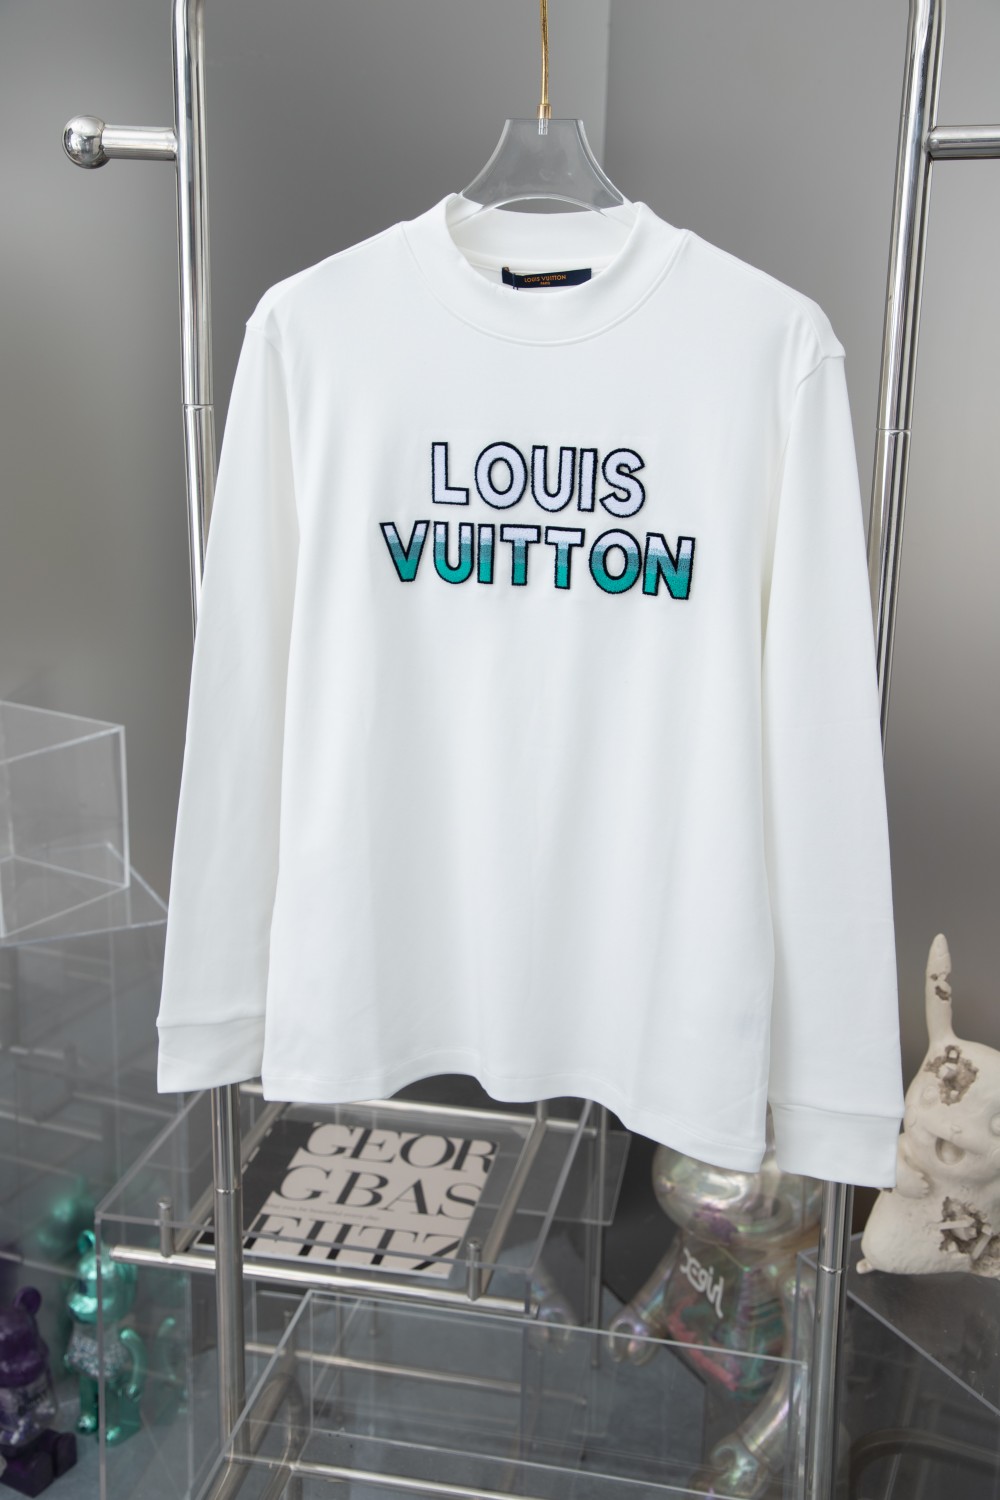 Louis Vuitton Clothing T-Shirt Black White Cotton Fall/Winter Collection Fashion Long Sleeve